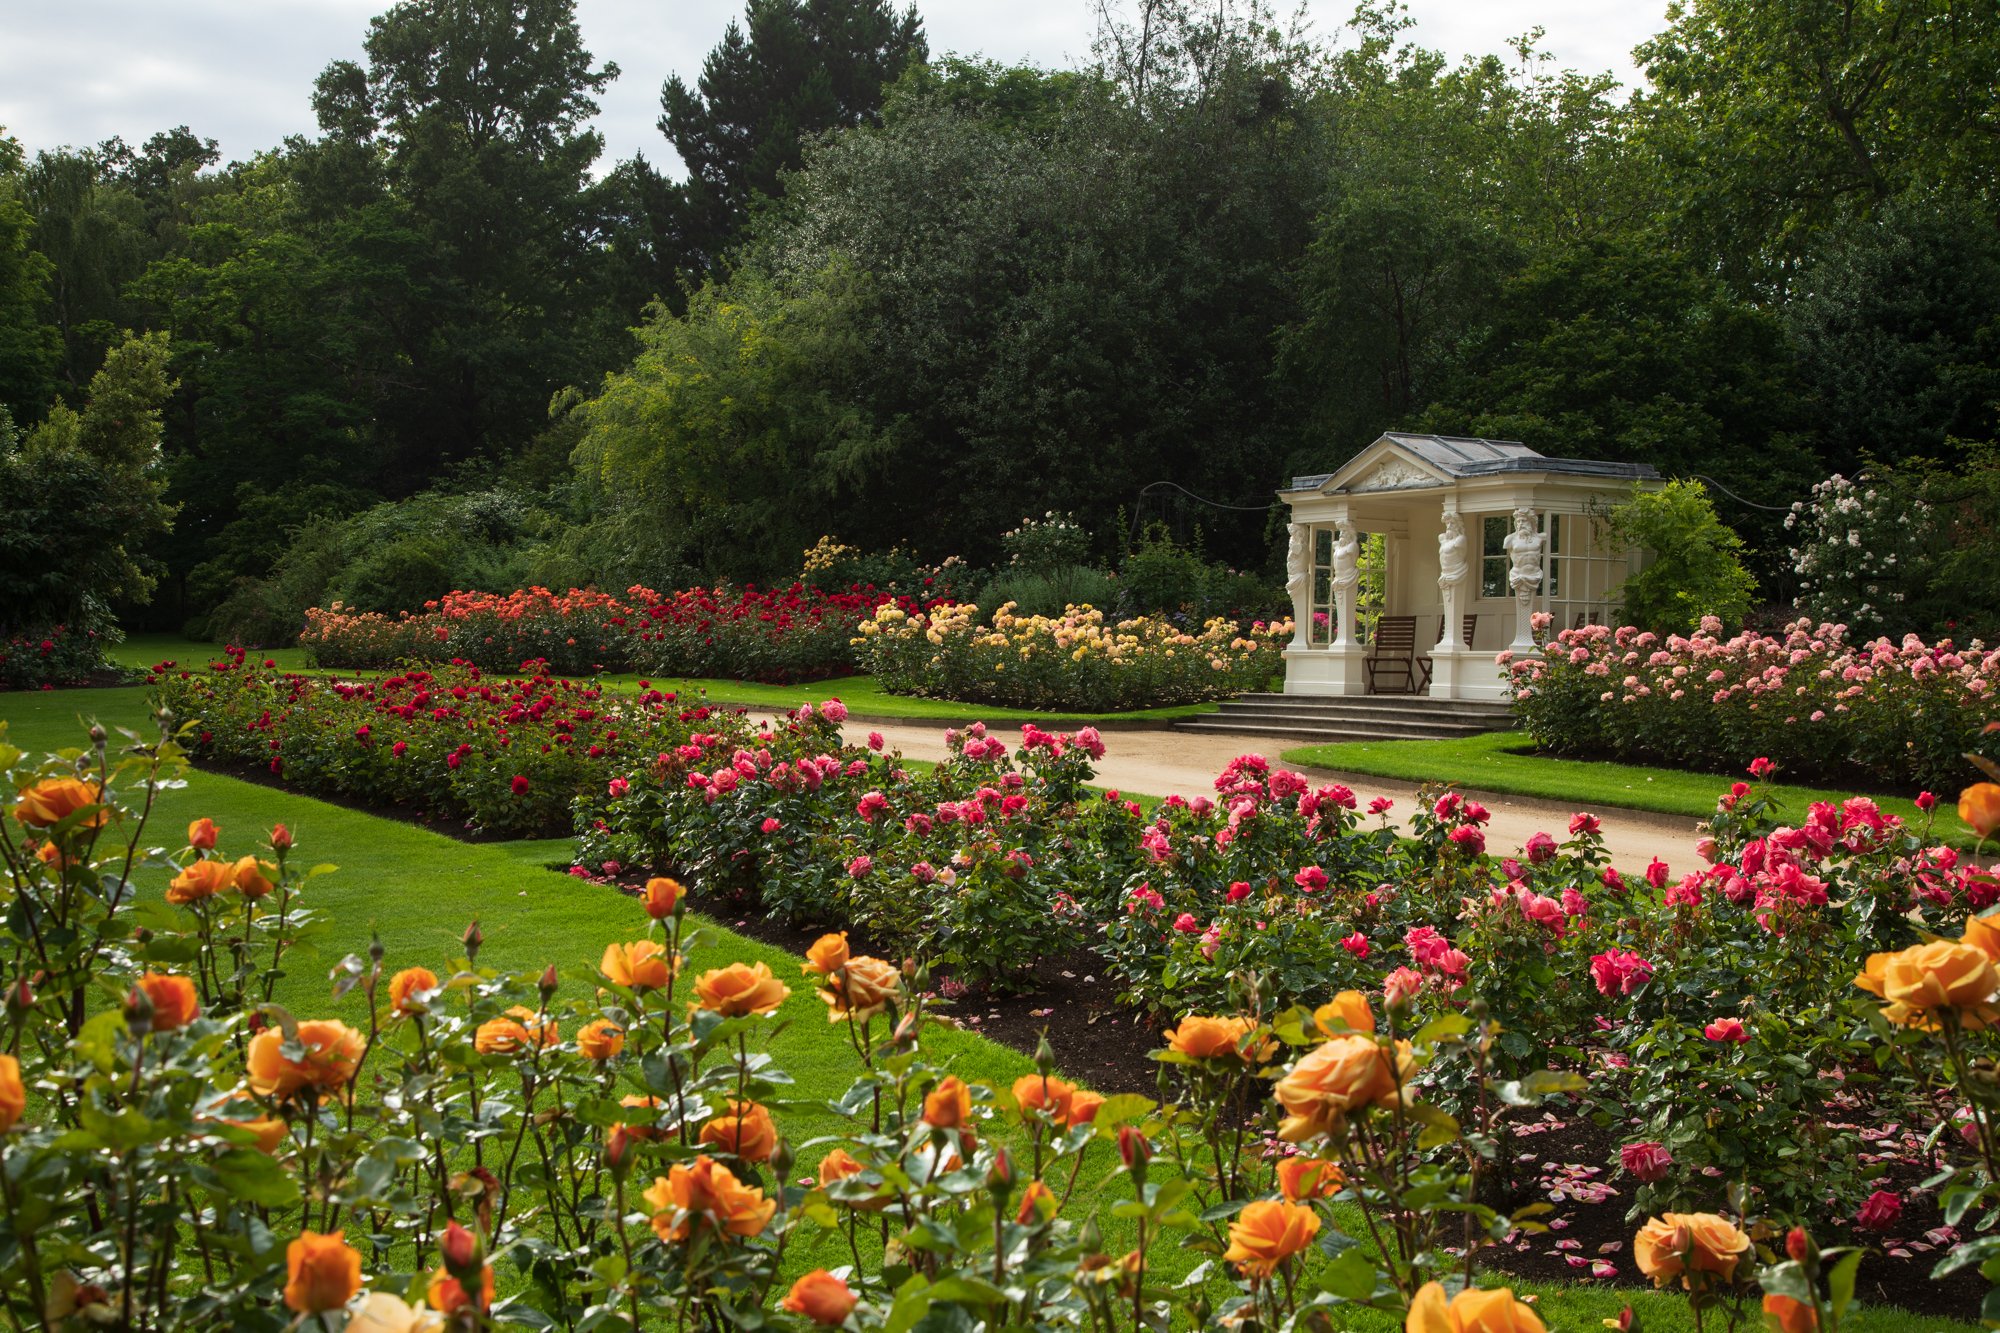 Explore The Garden at Buckingham Palace